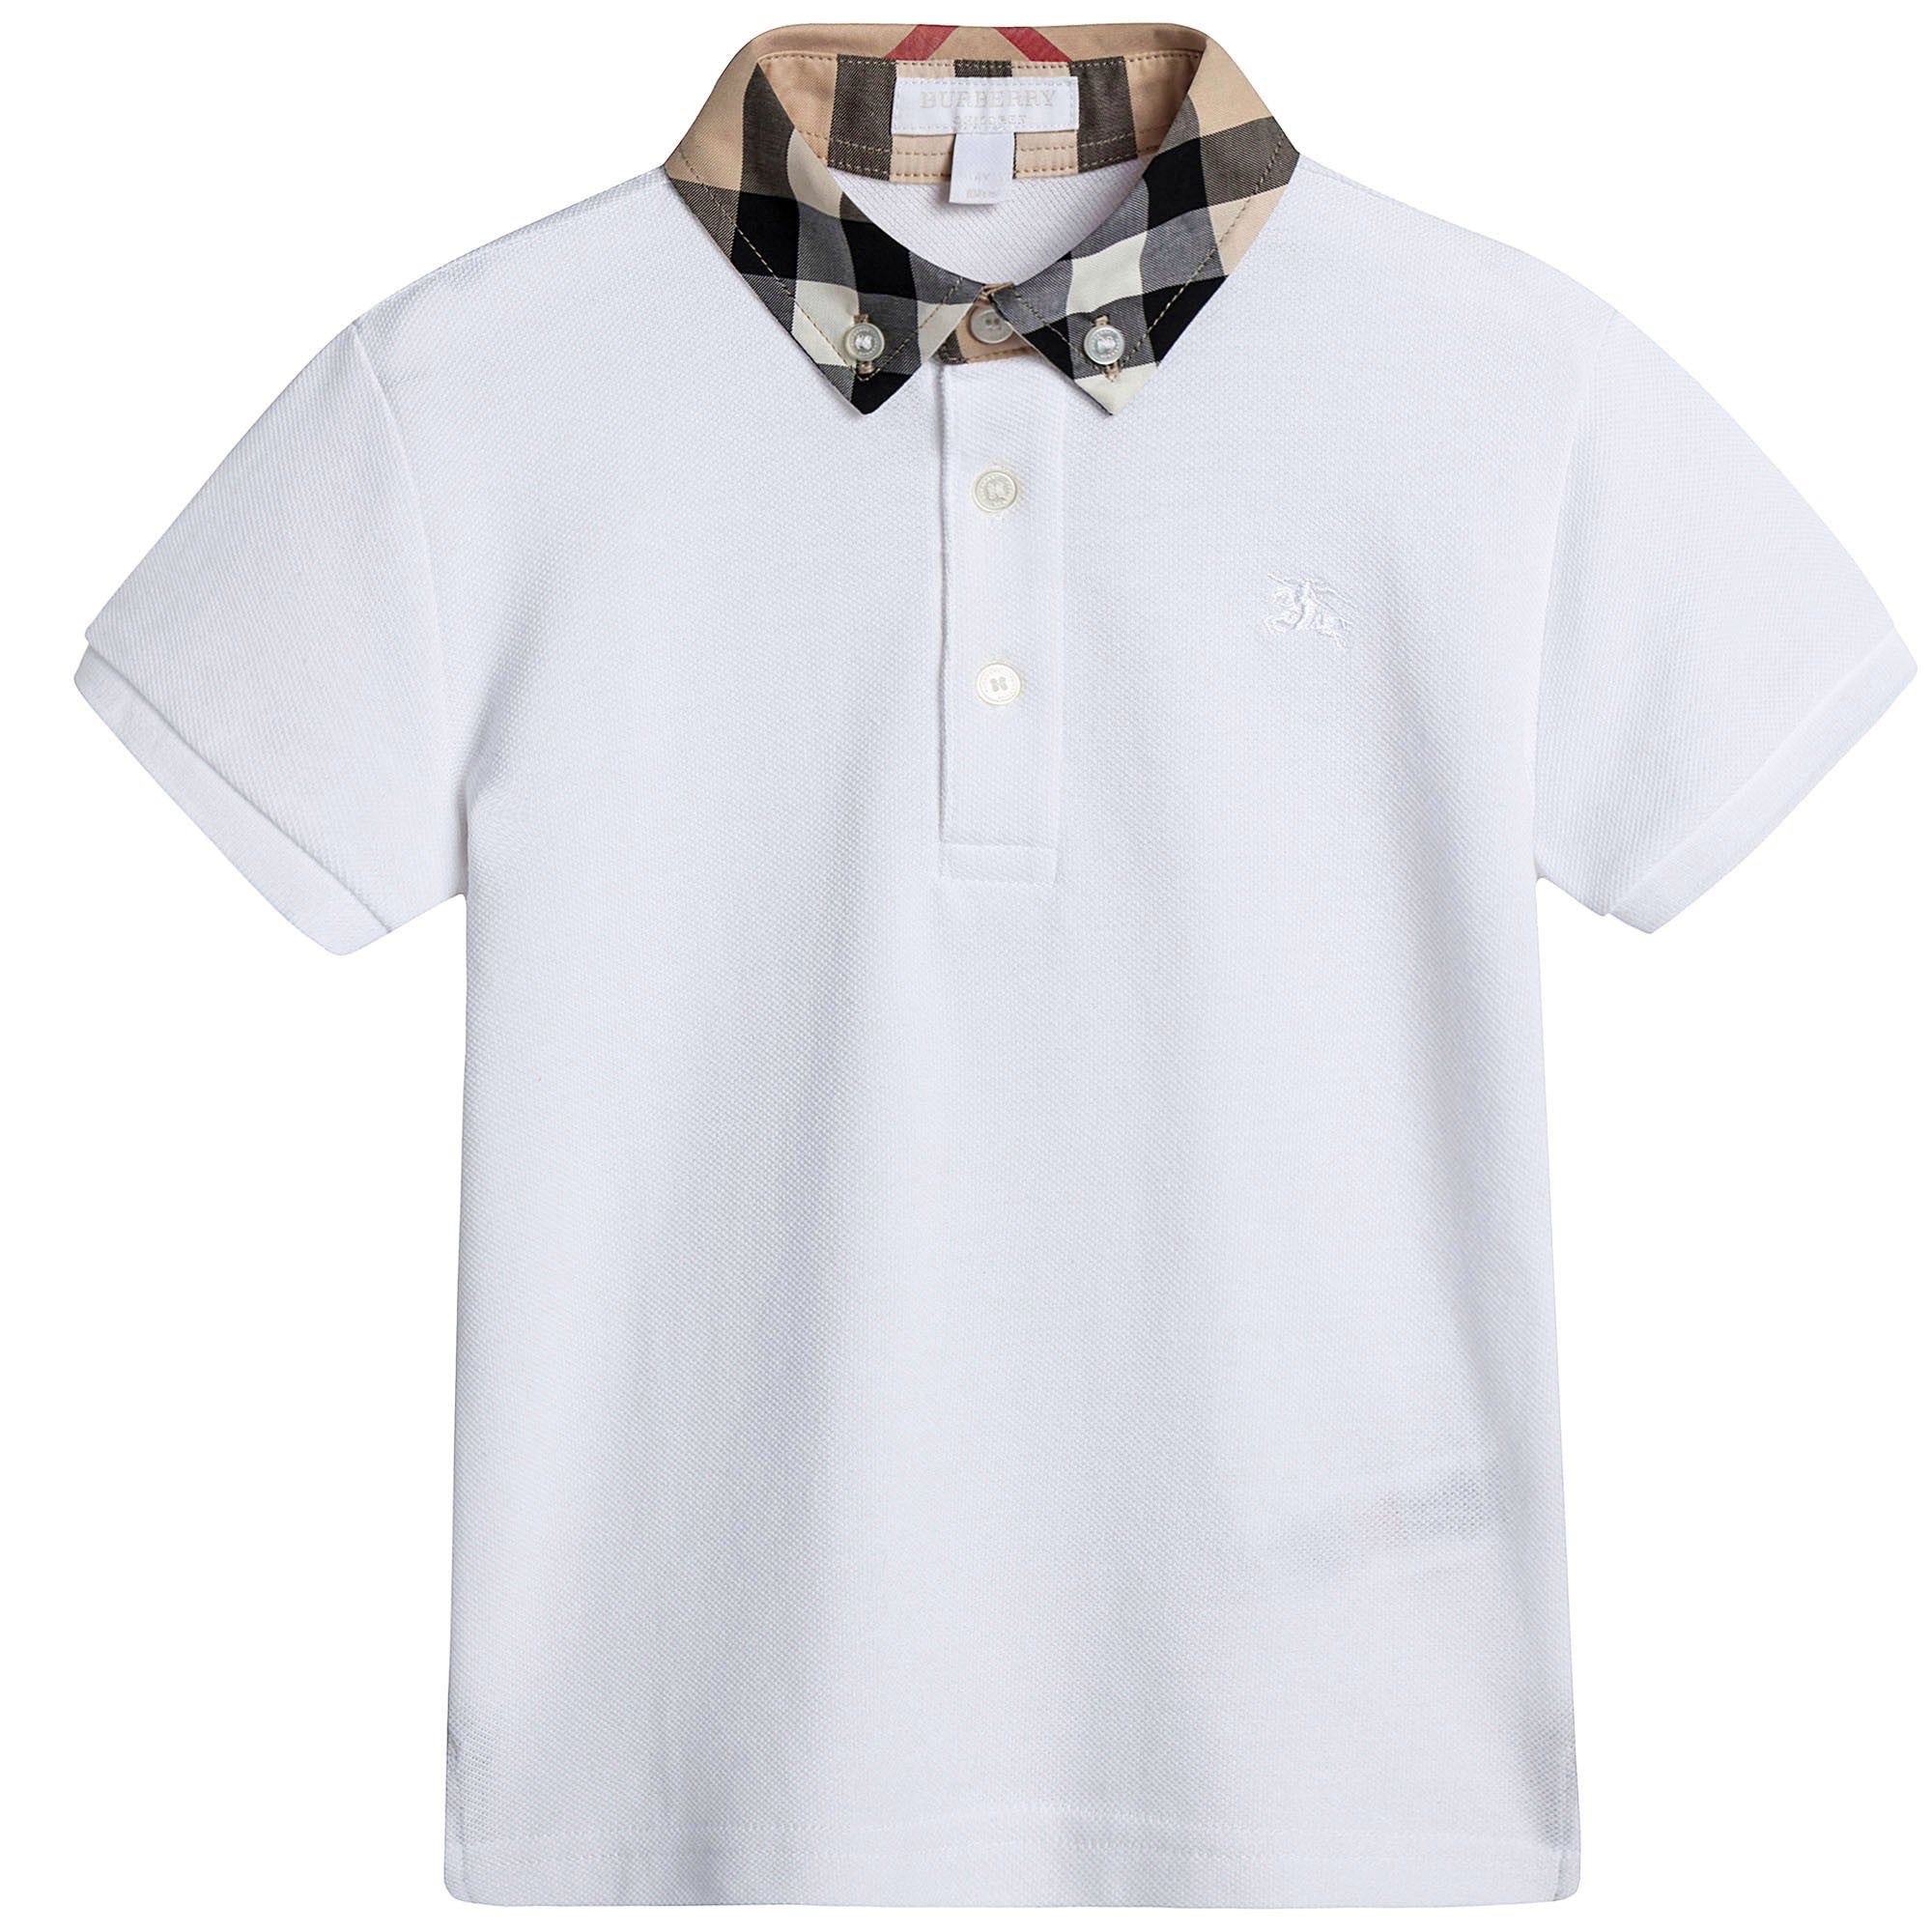 Boys White Cotton Polo Shirt With Checked Collar - CÉMAROSE | Children's Fashion Store - 1